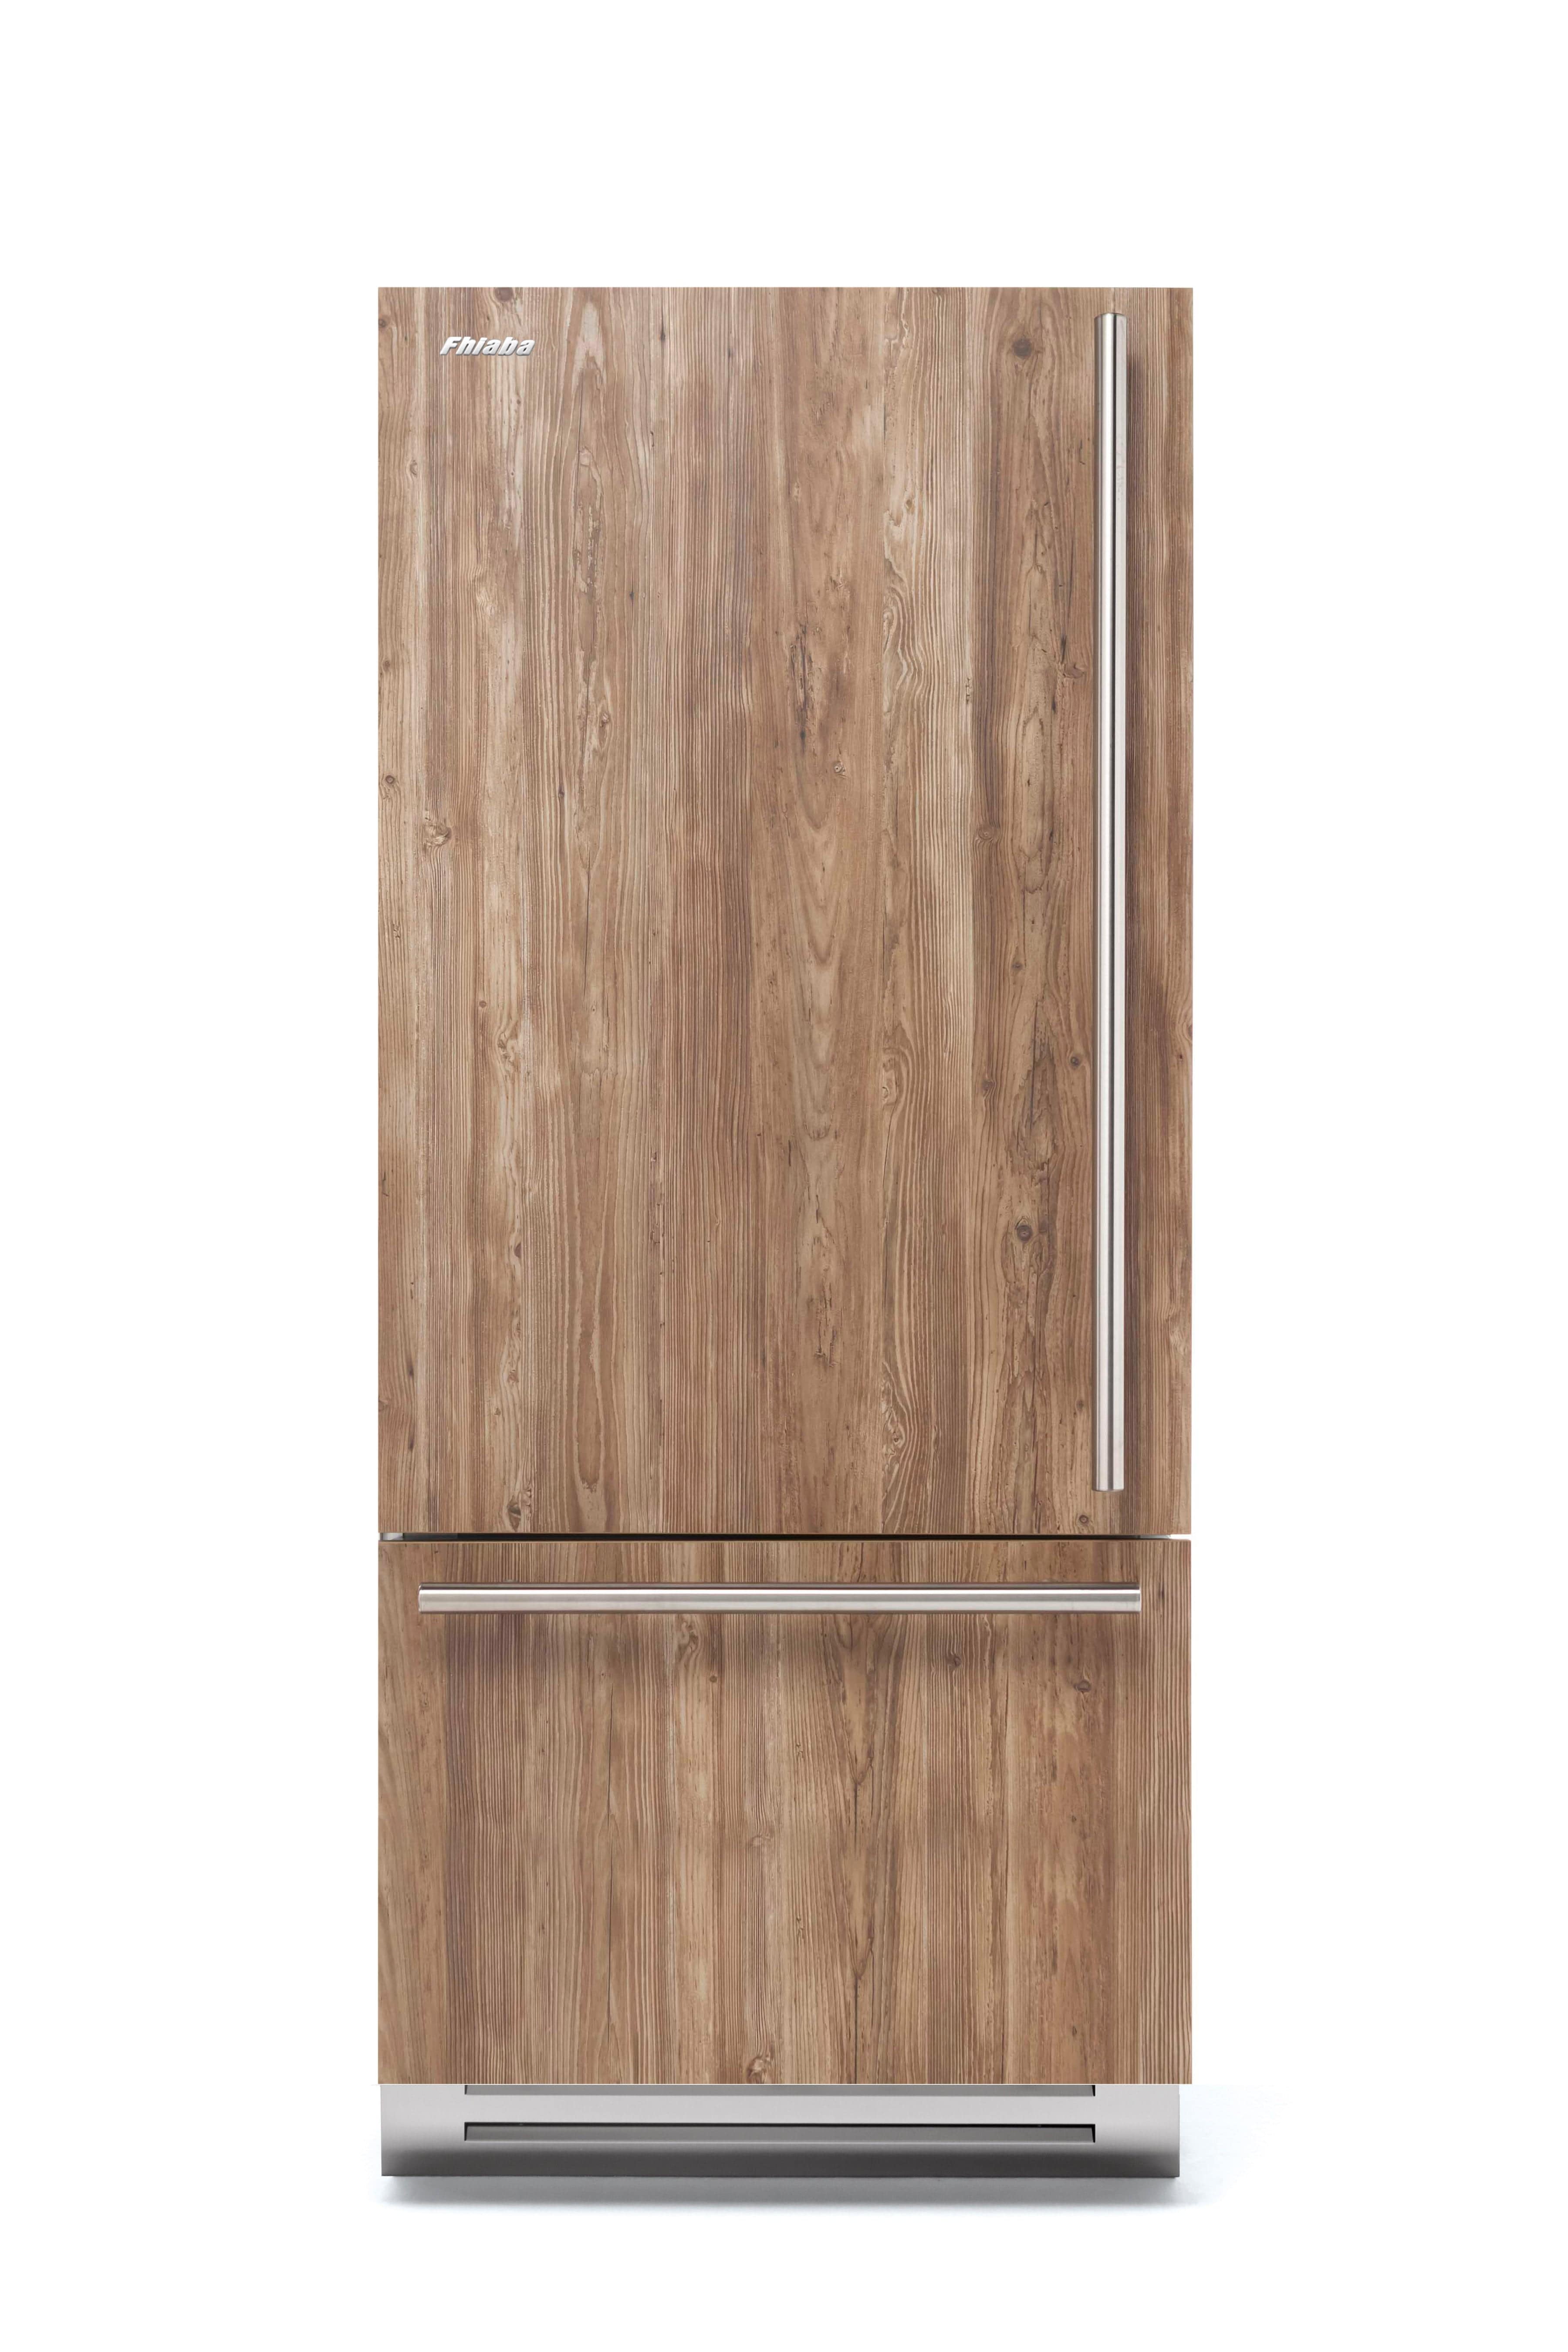 Fhiaba Intergrated 36" Panel Ready, Built-in Refrigerator FI36Bi Refrigerators Luxury Appliances Direct